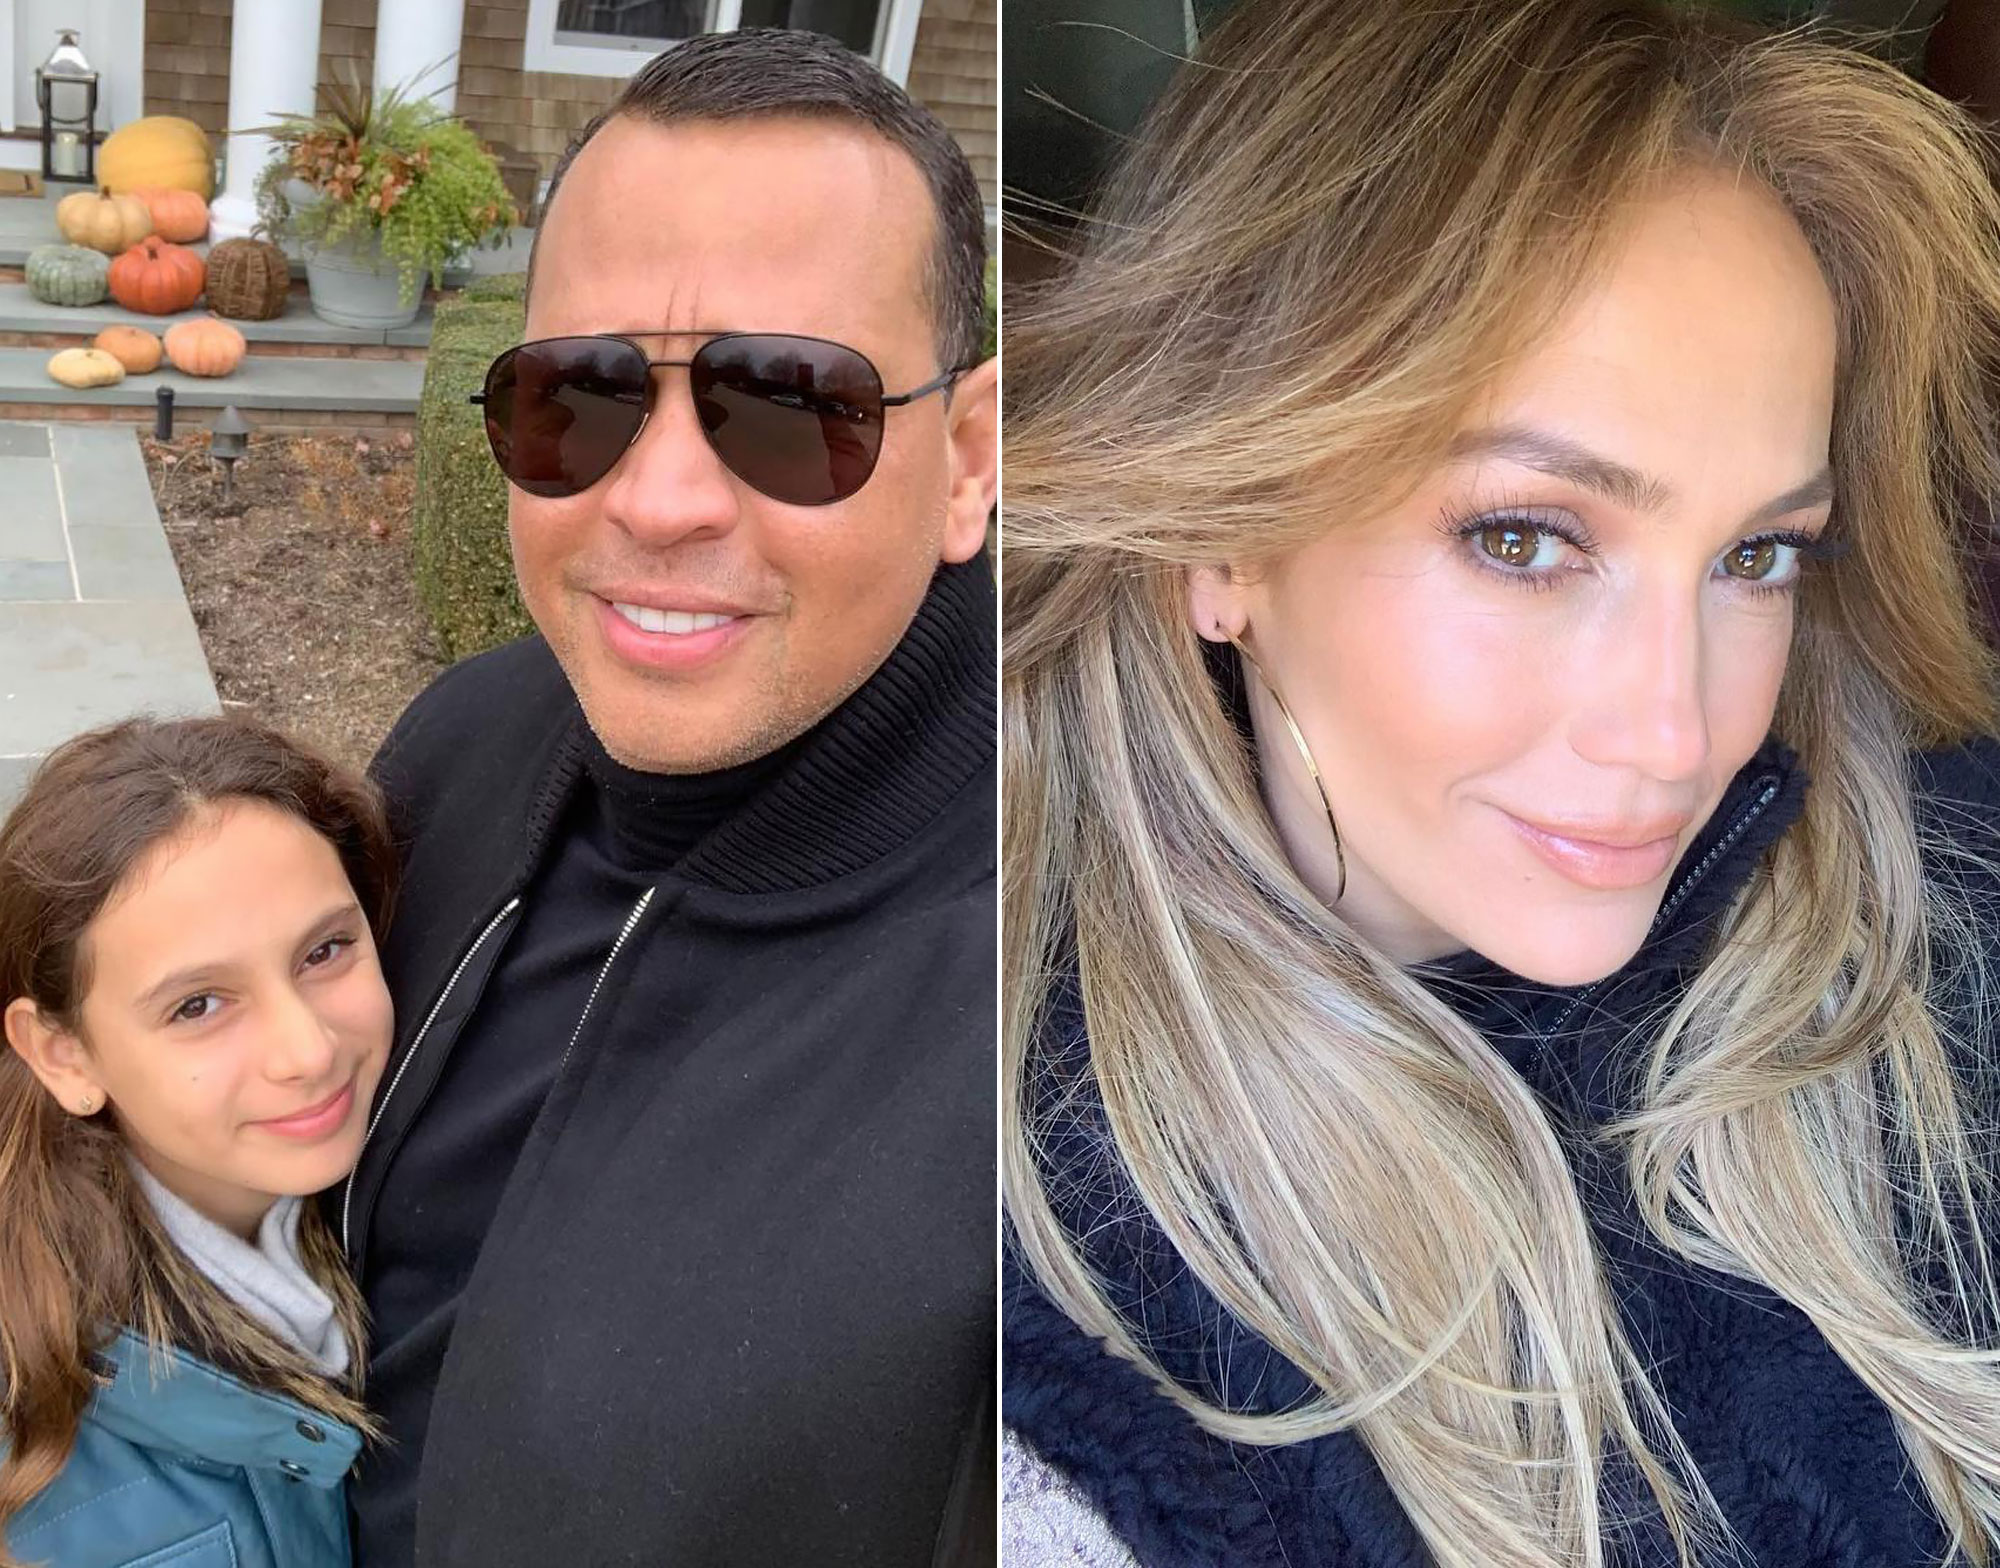 Jennifer Lopez wishes Alex Rodriguez's daughter happy birthday